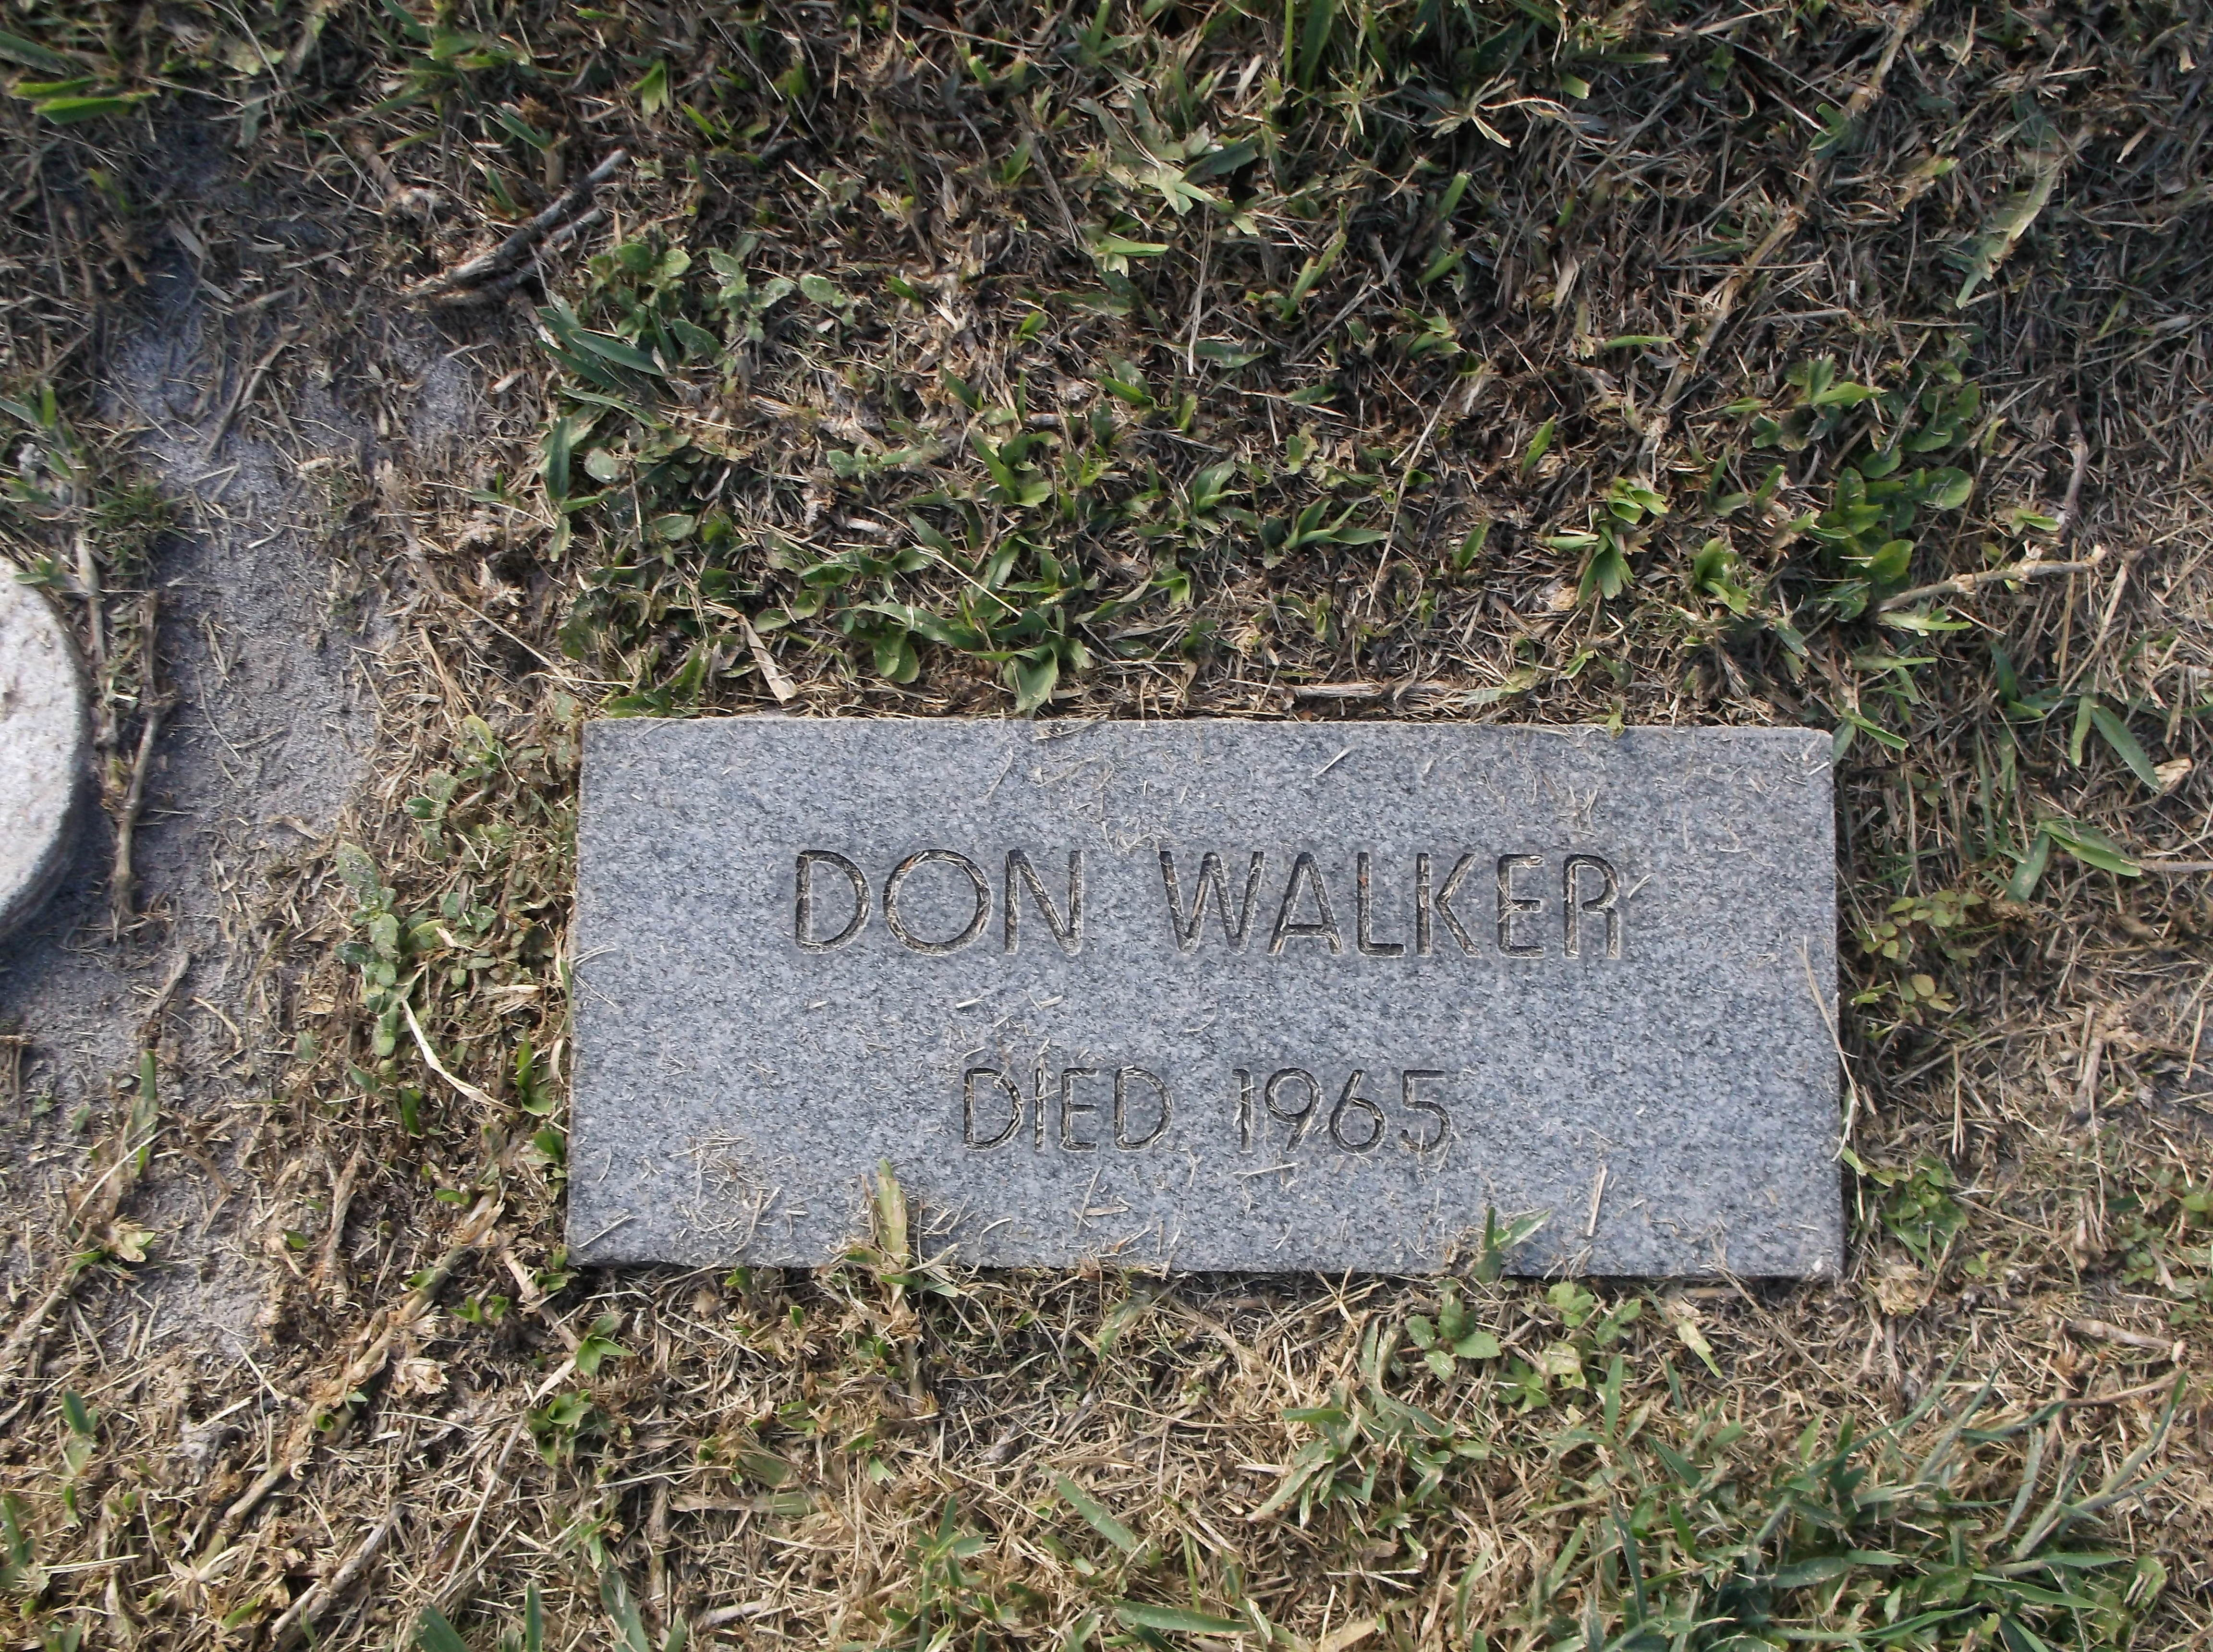 Don Walker